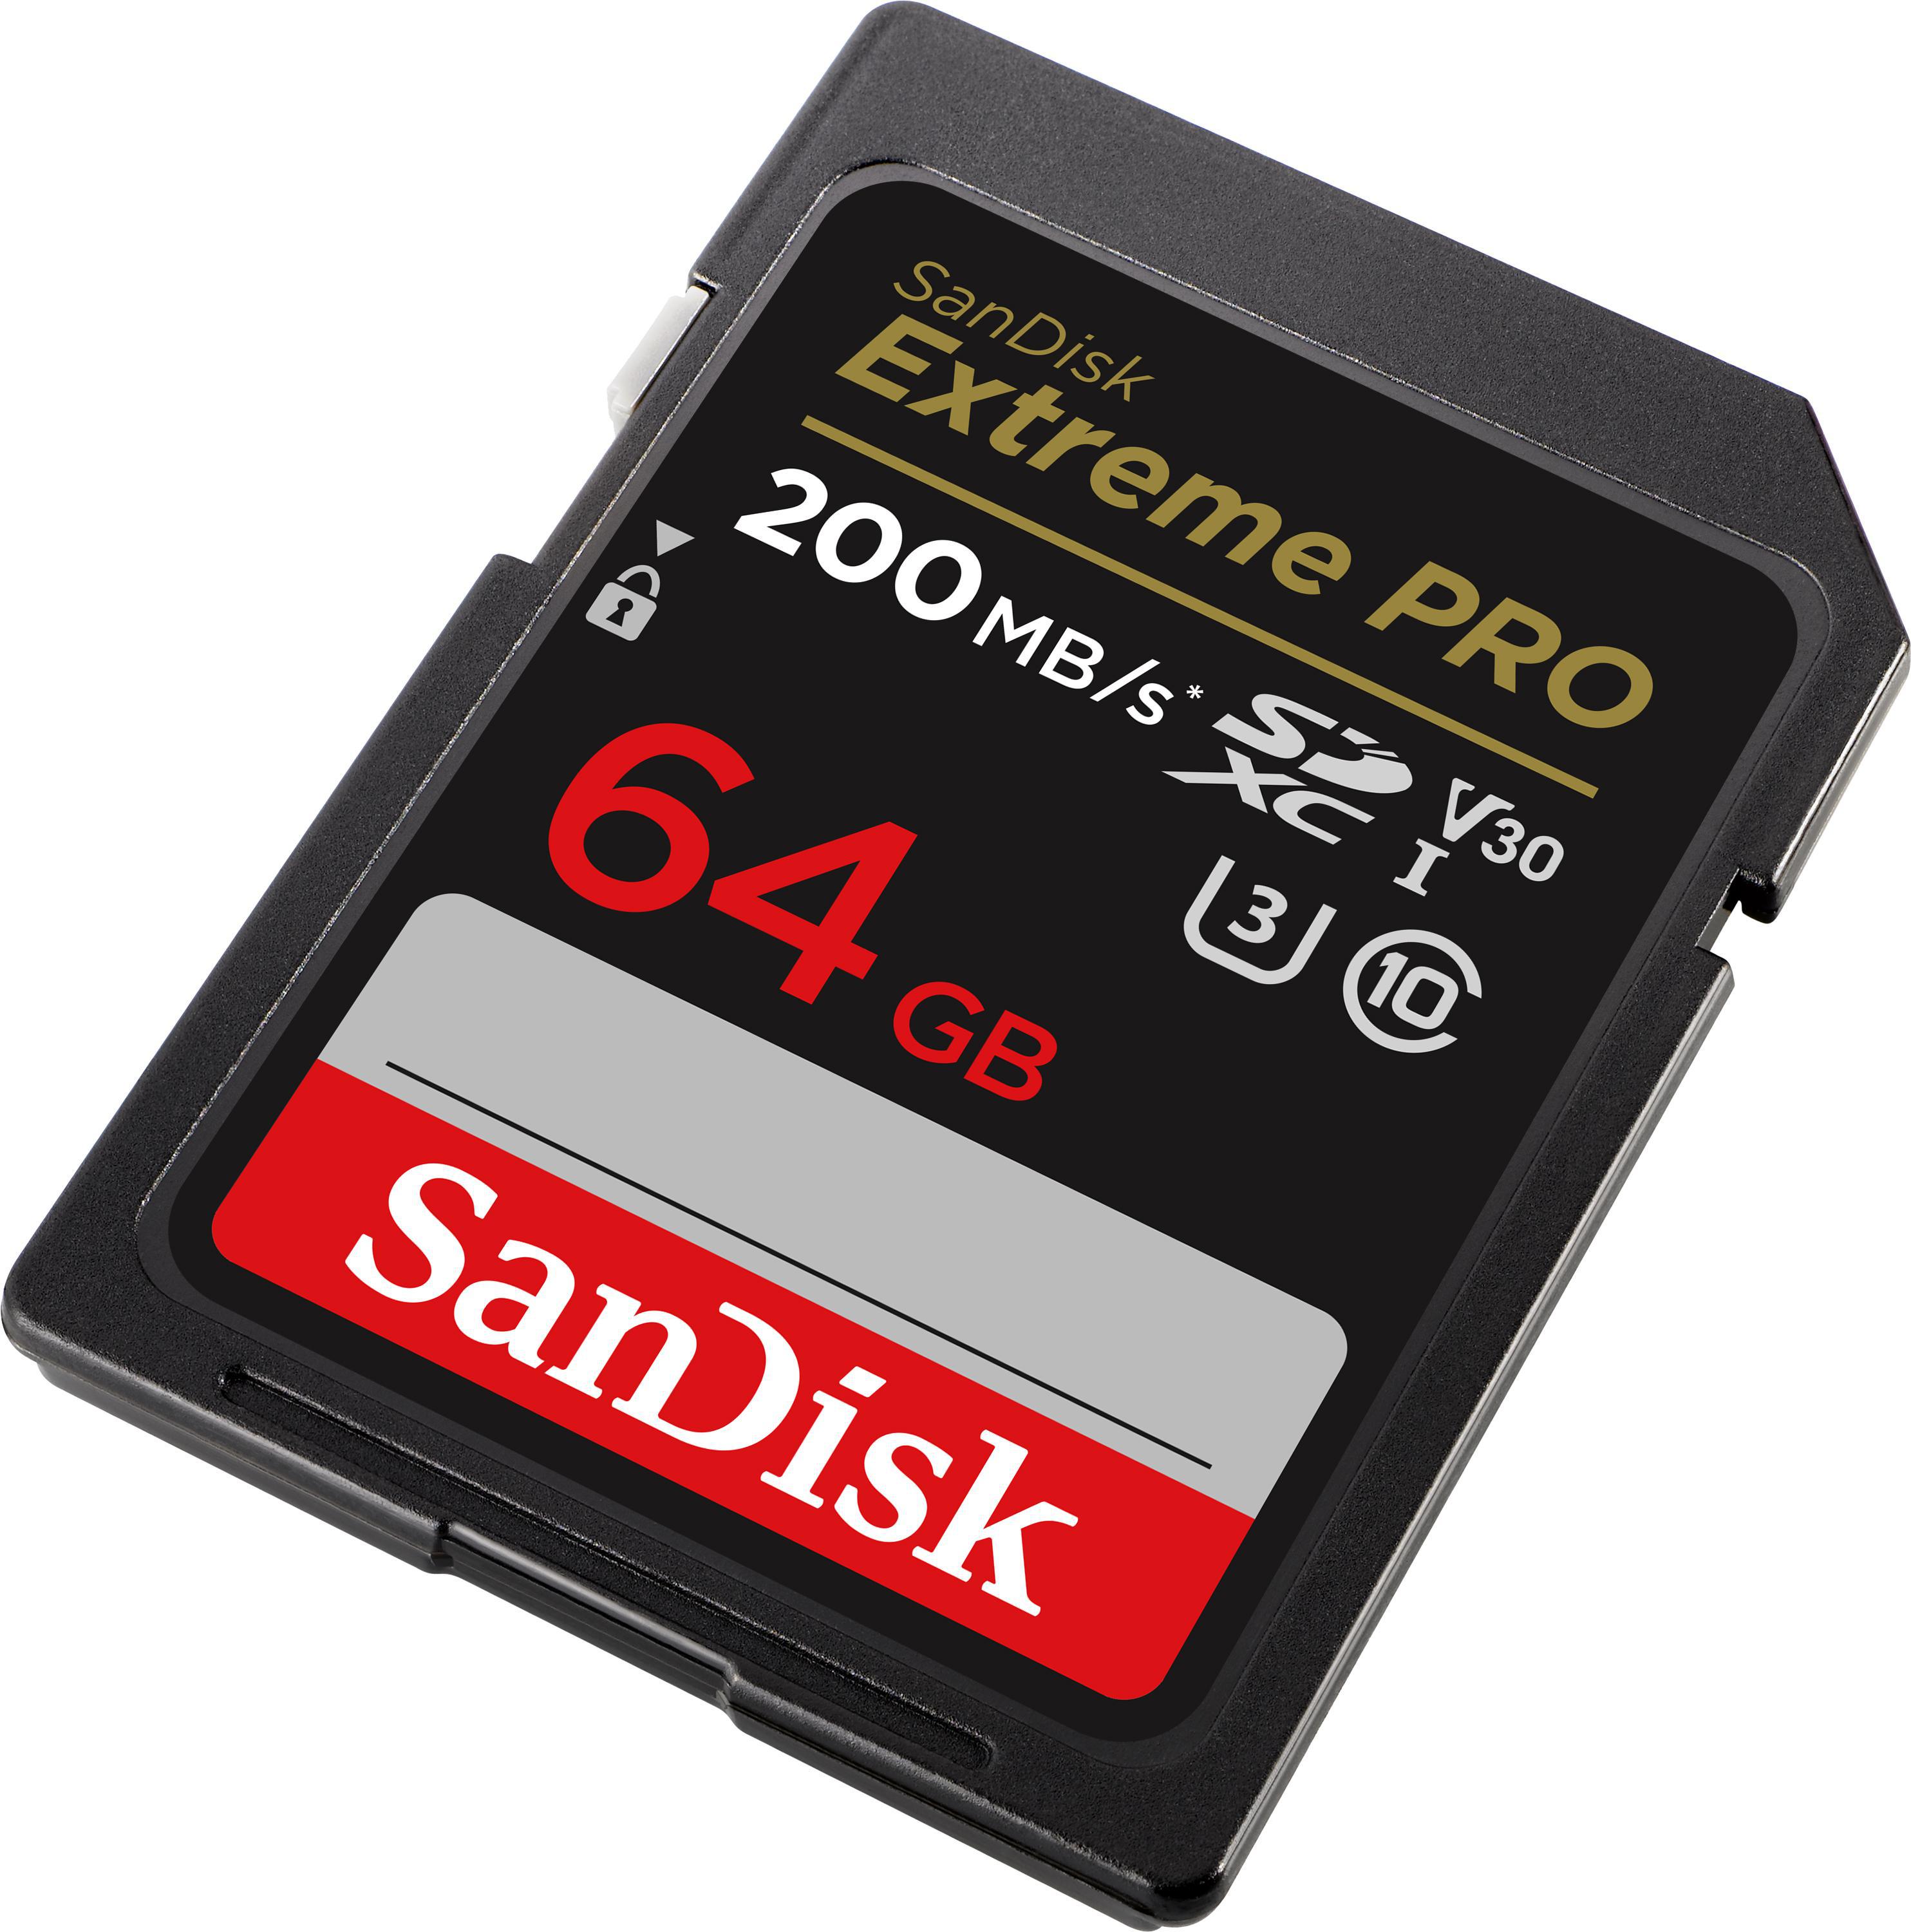 Extreme MB/s SANDISK UHS-I, SDXC PRO® 200 64 GB, Speicherkarte,